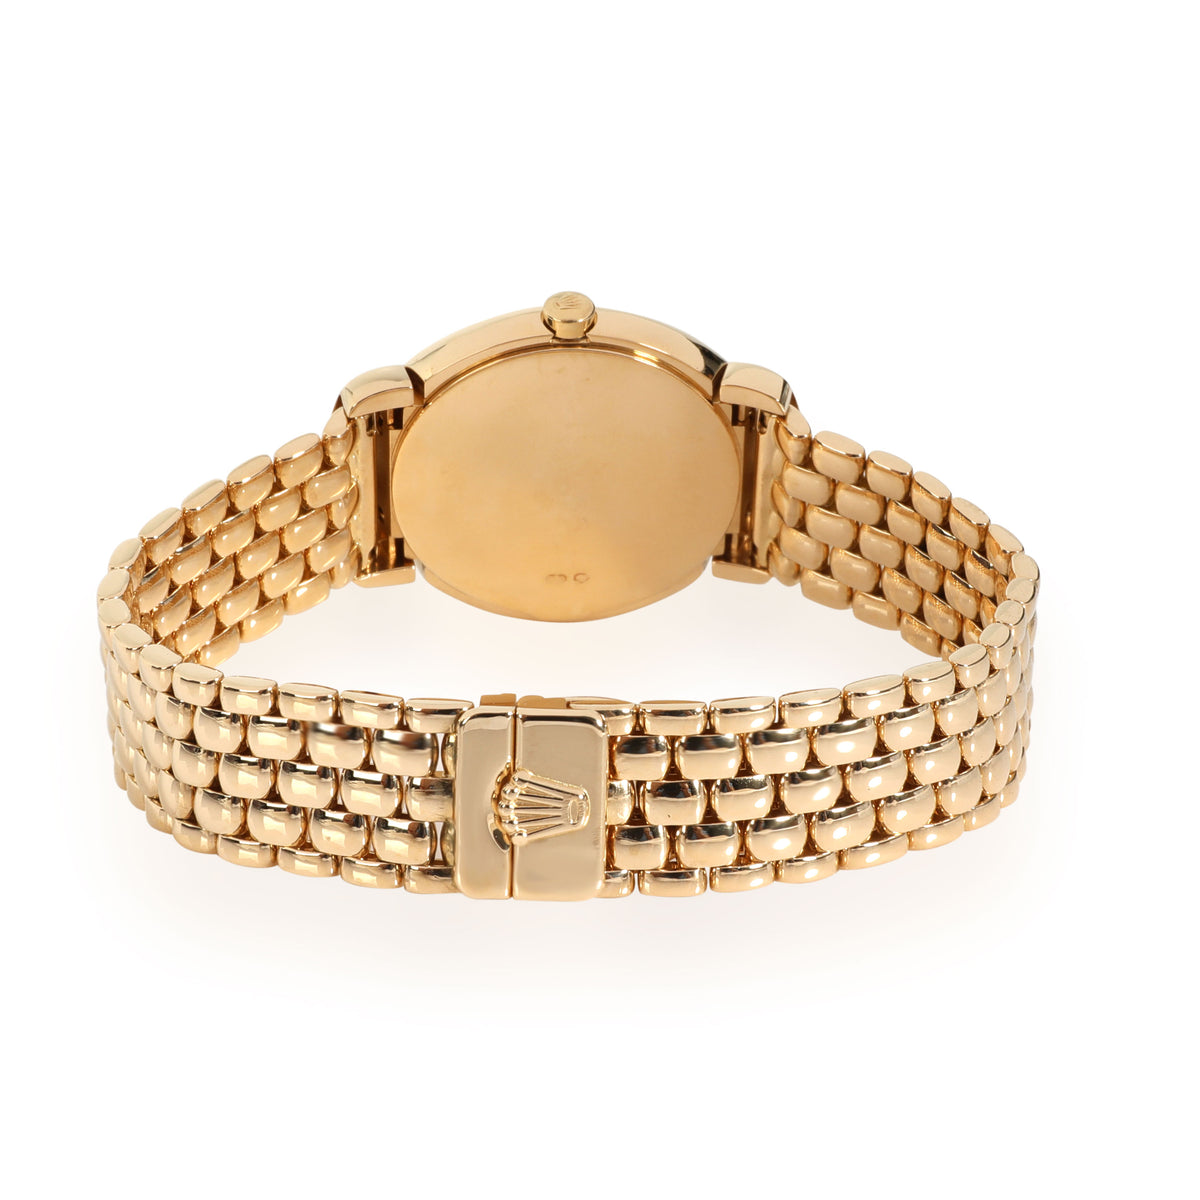 Rolex Cellini 6621 Women's Watch in 18kt Yellow Gold